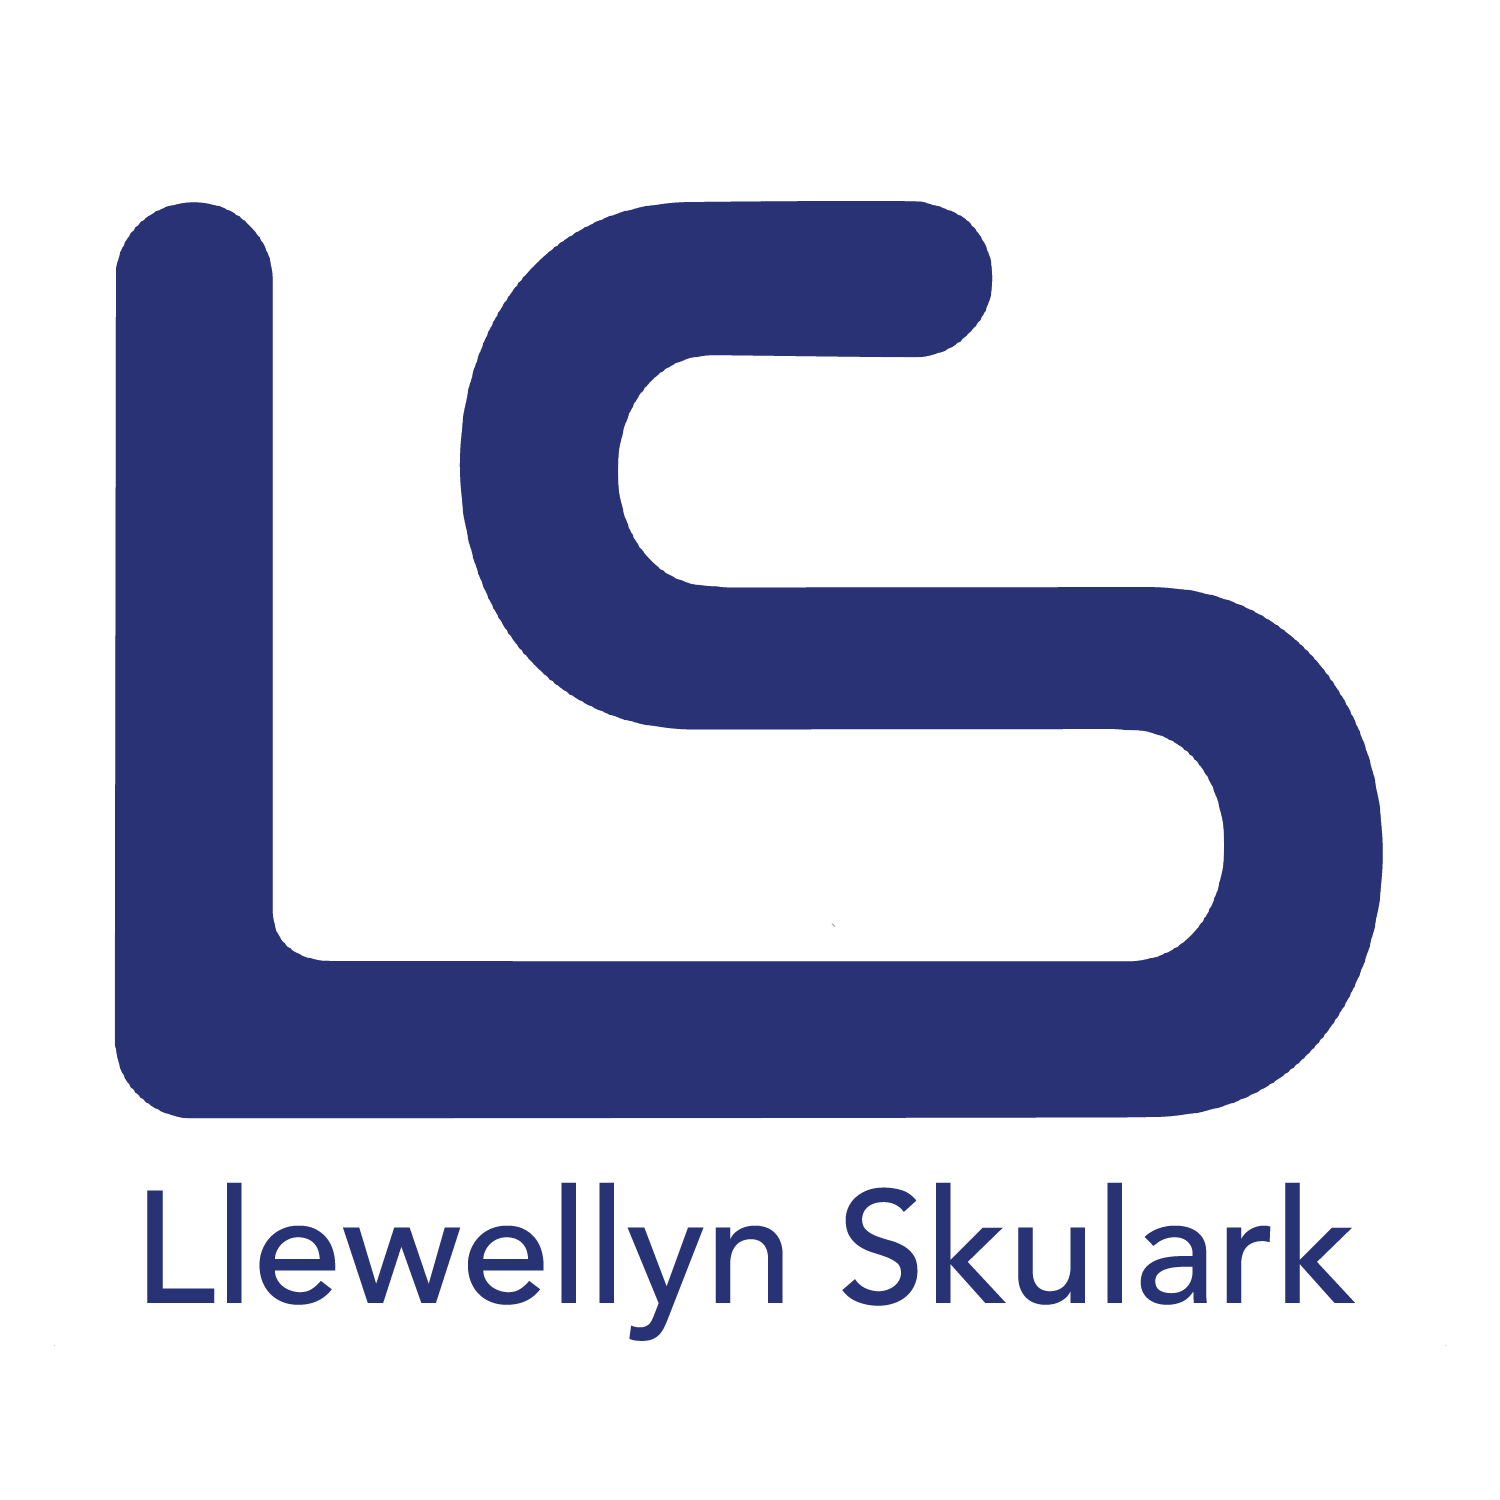 Llewellyn Skulark